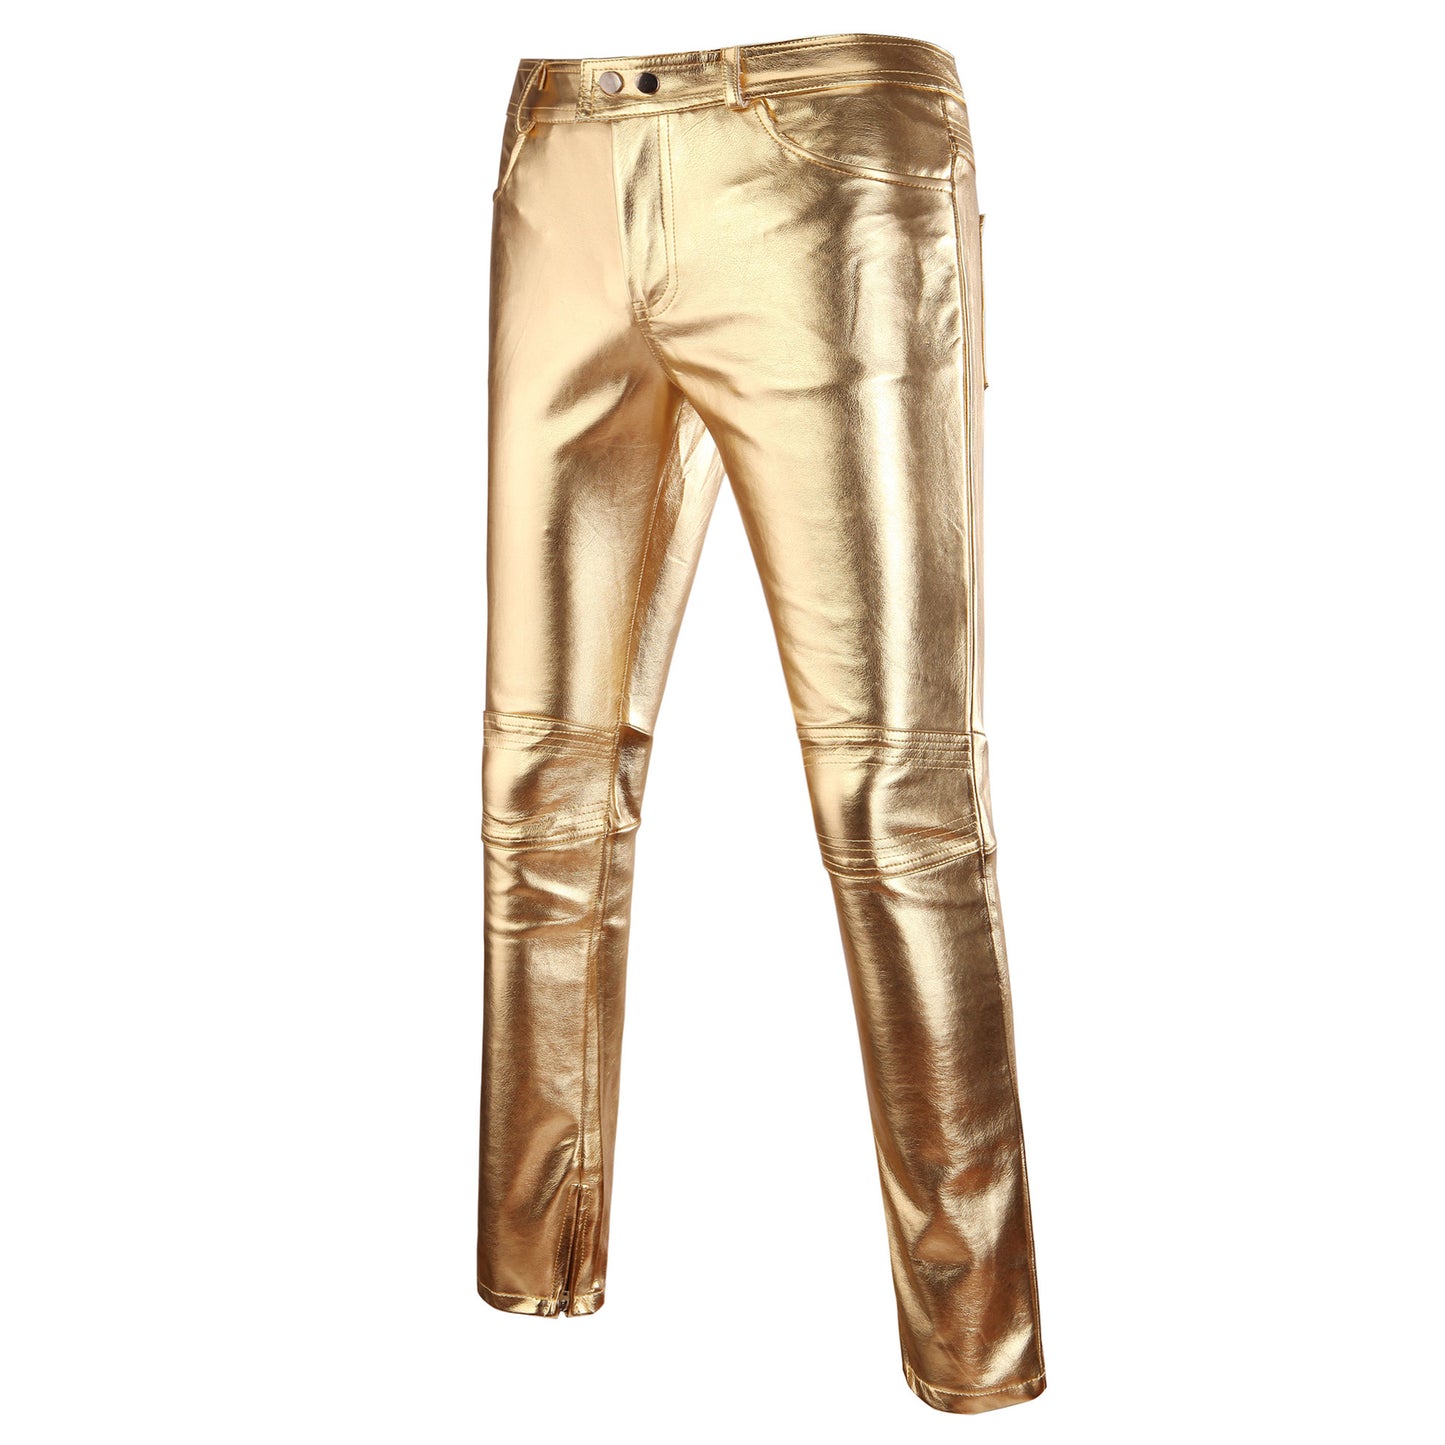 Men's Shiny Trousers Bronzing Costume Casual Pants